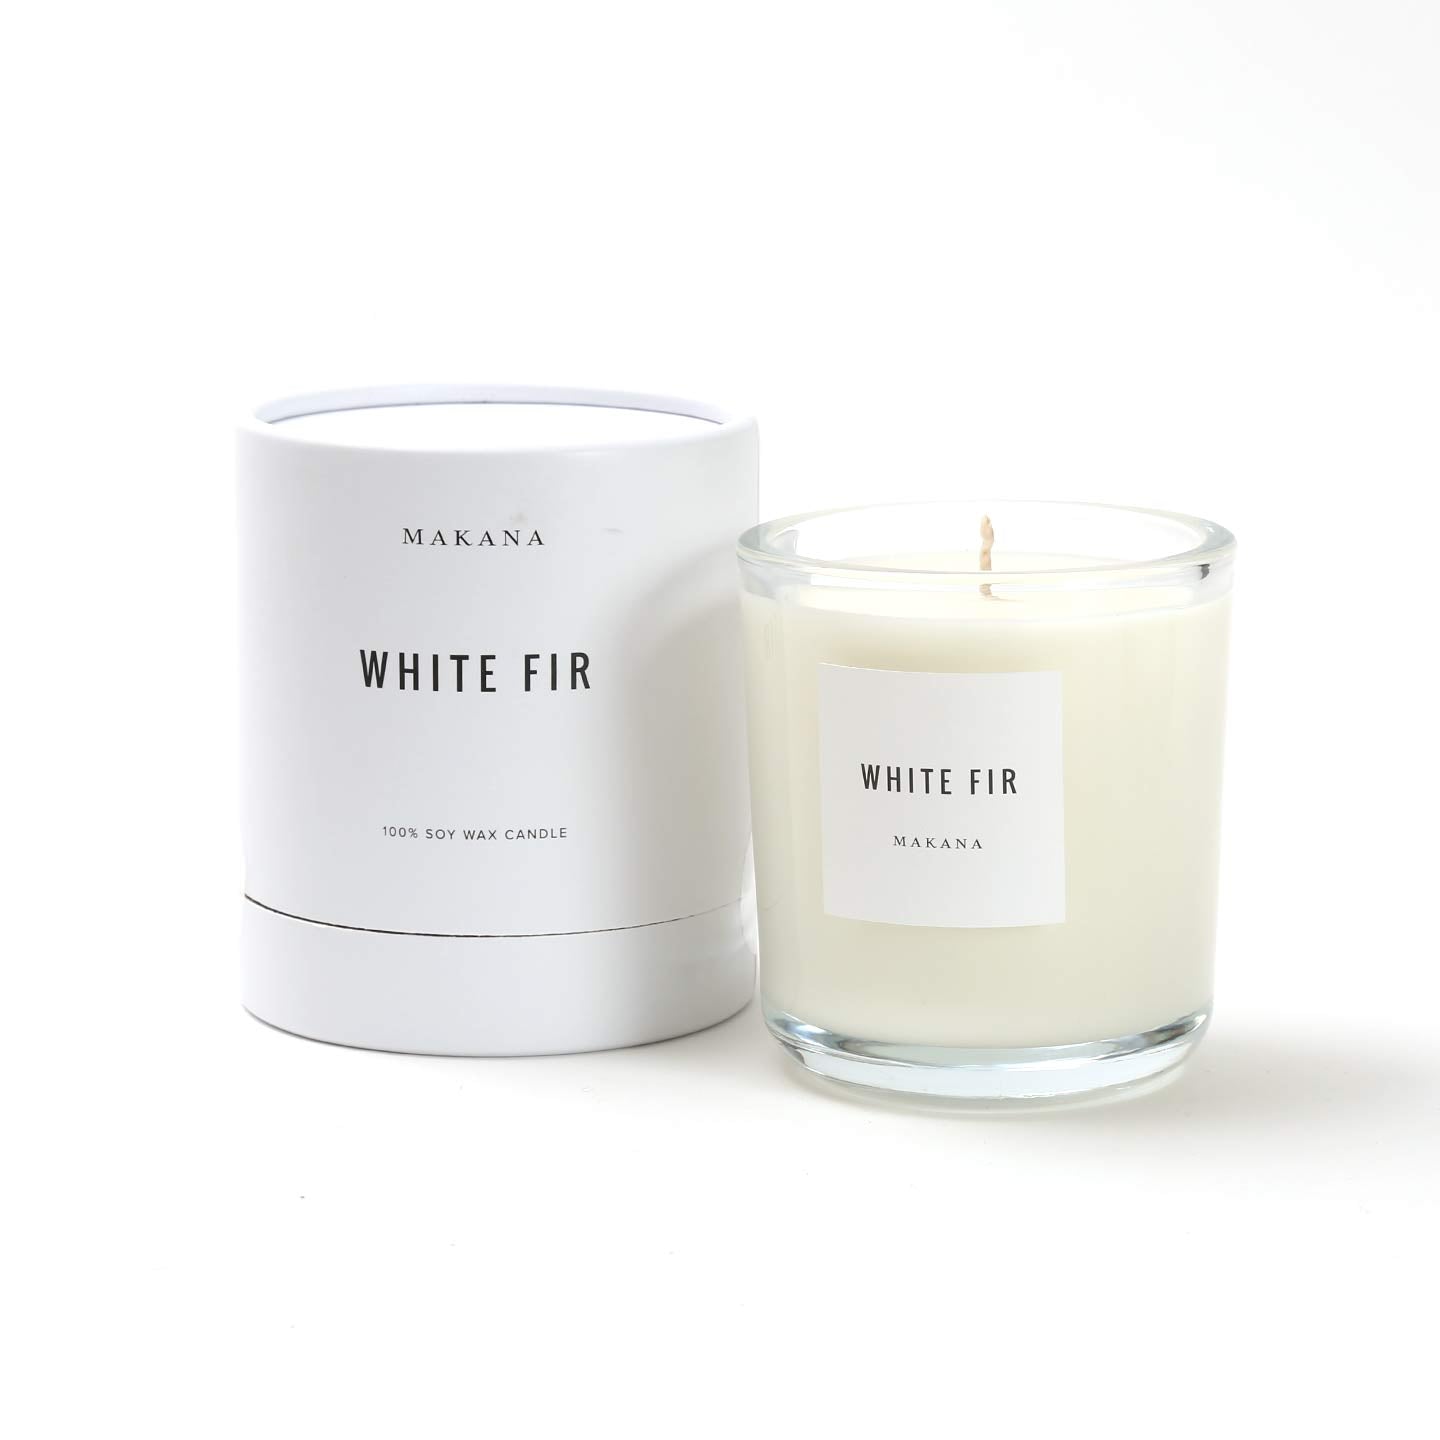 White Pearl Tuberose Classic Candle– Makana